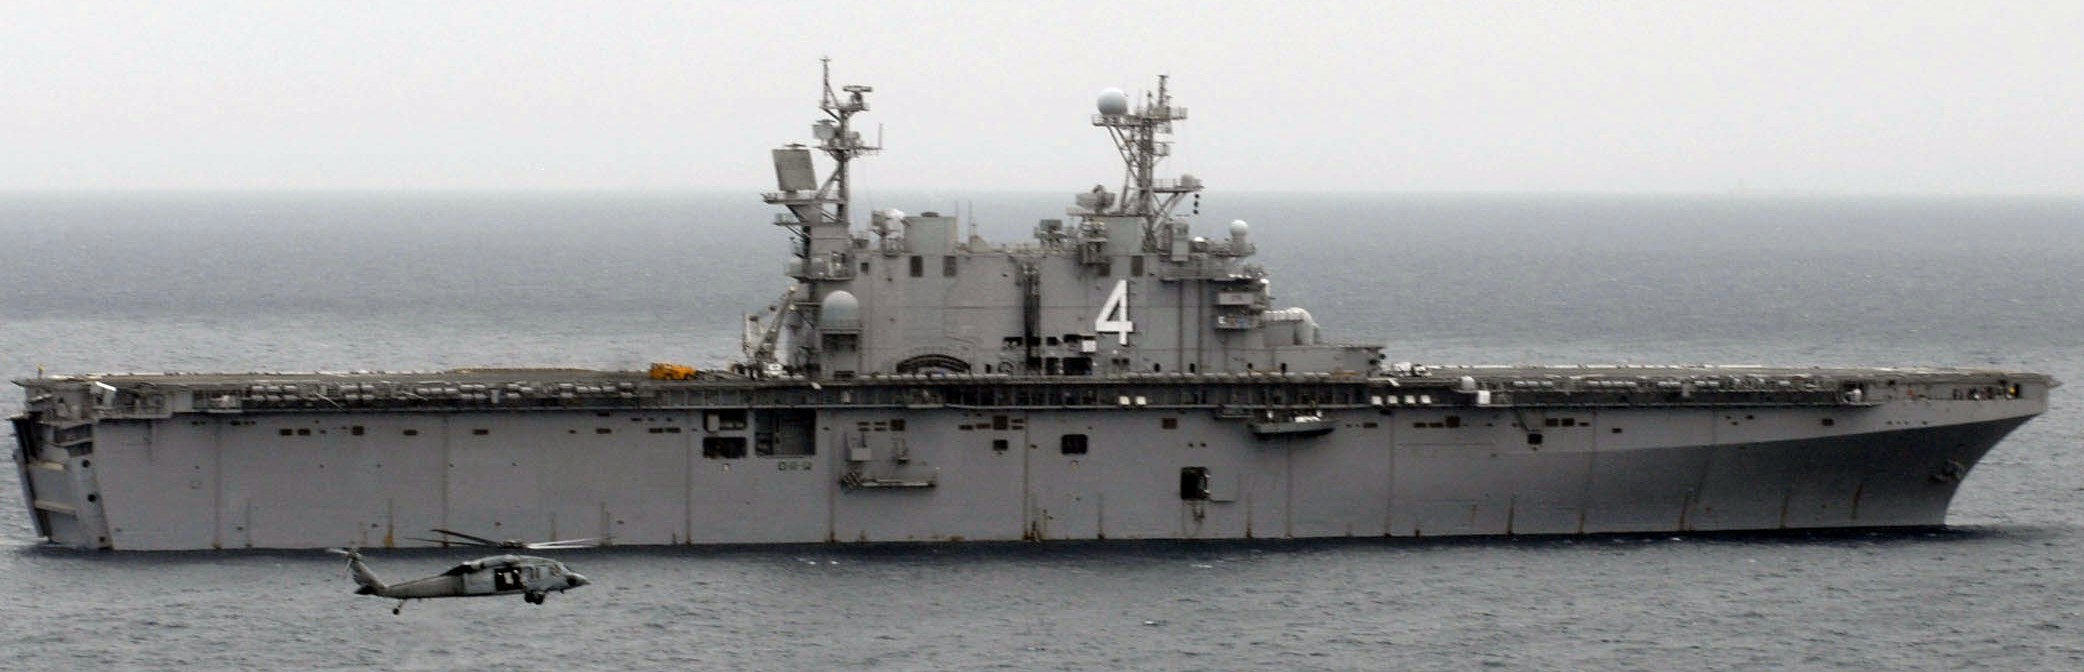 lha-4 uss nassau tarawa class amphibious assault ship us navy 36 persian gulf